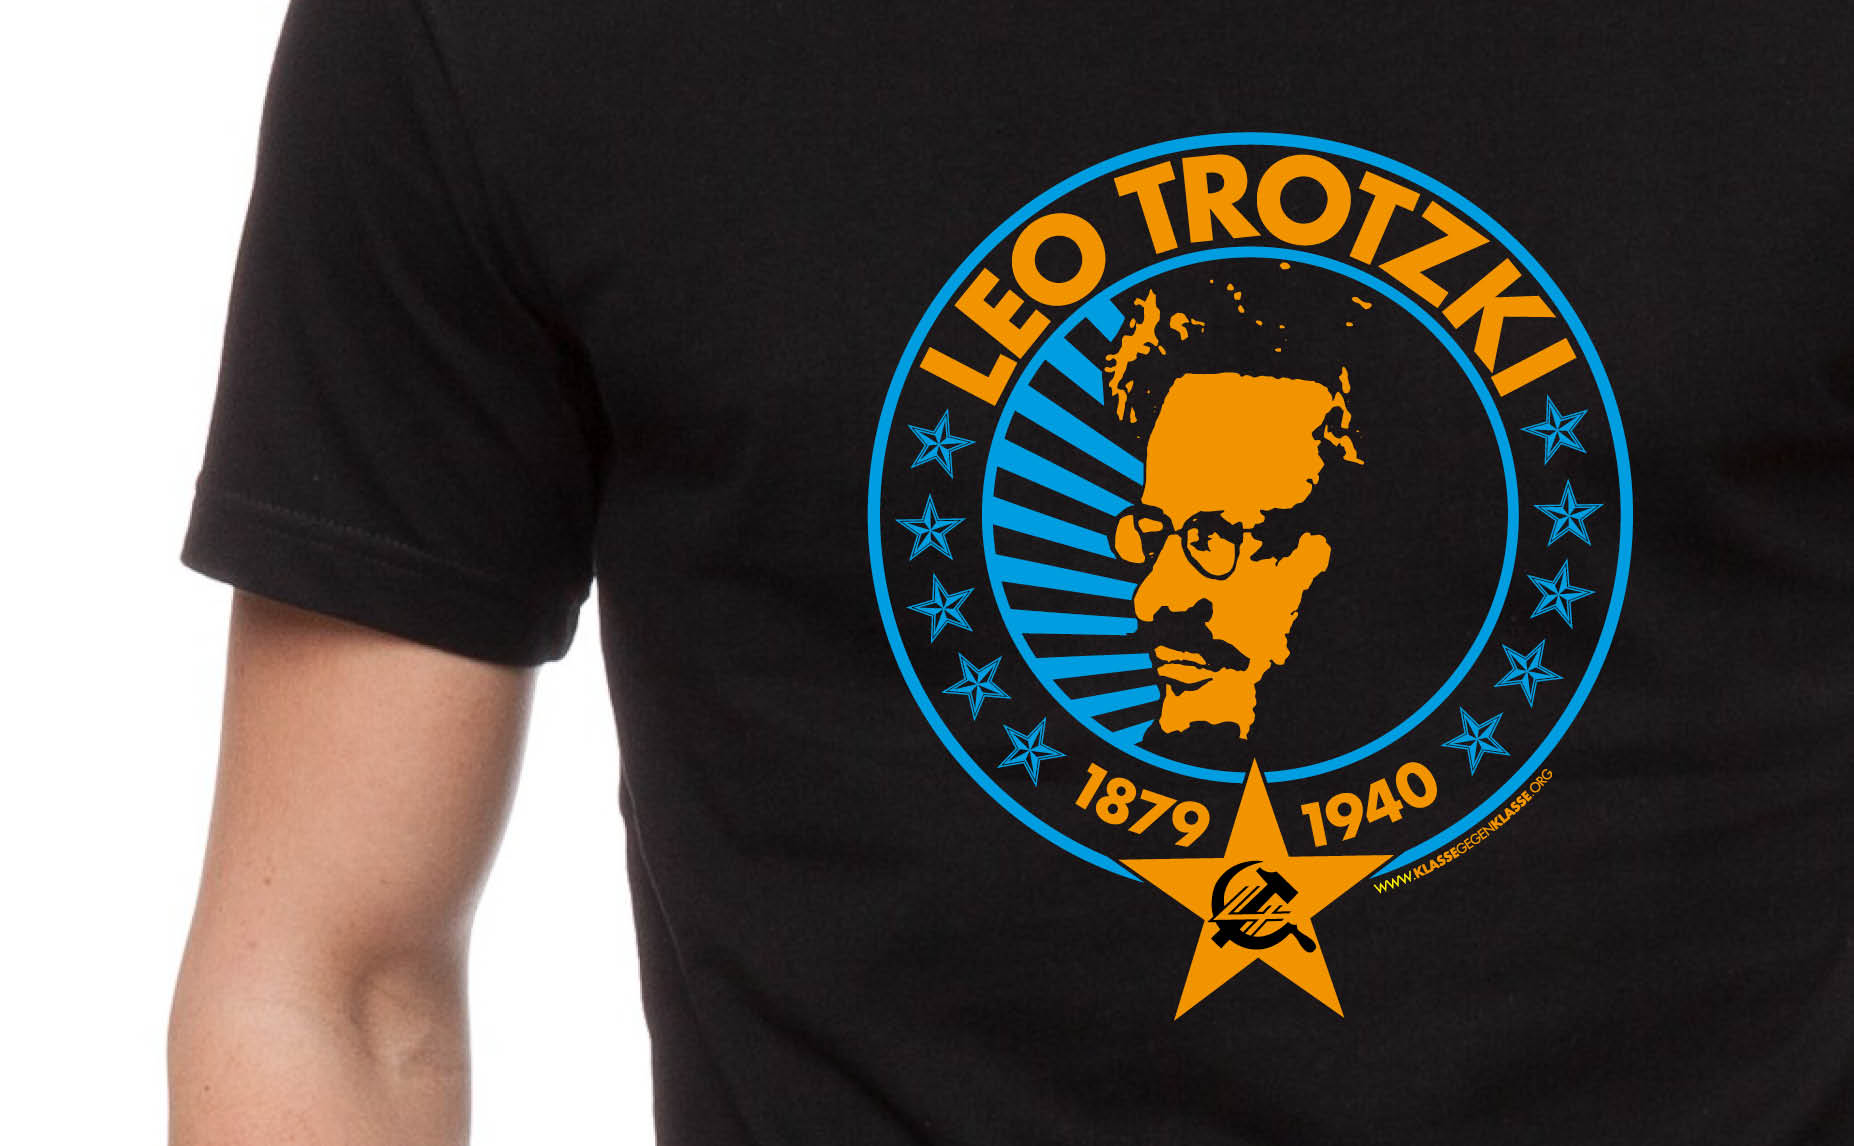 Trotzki-Shirts